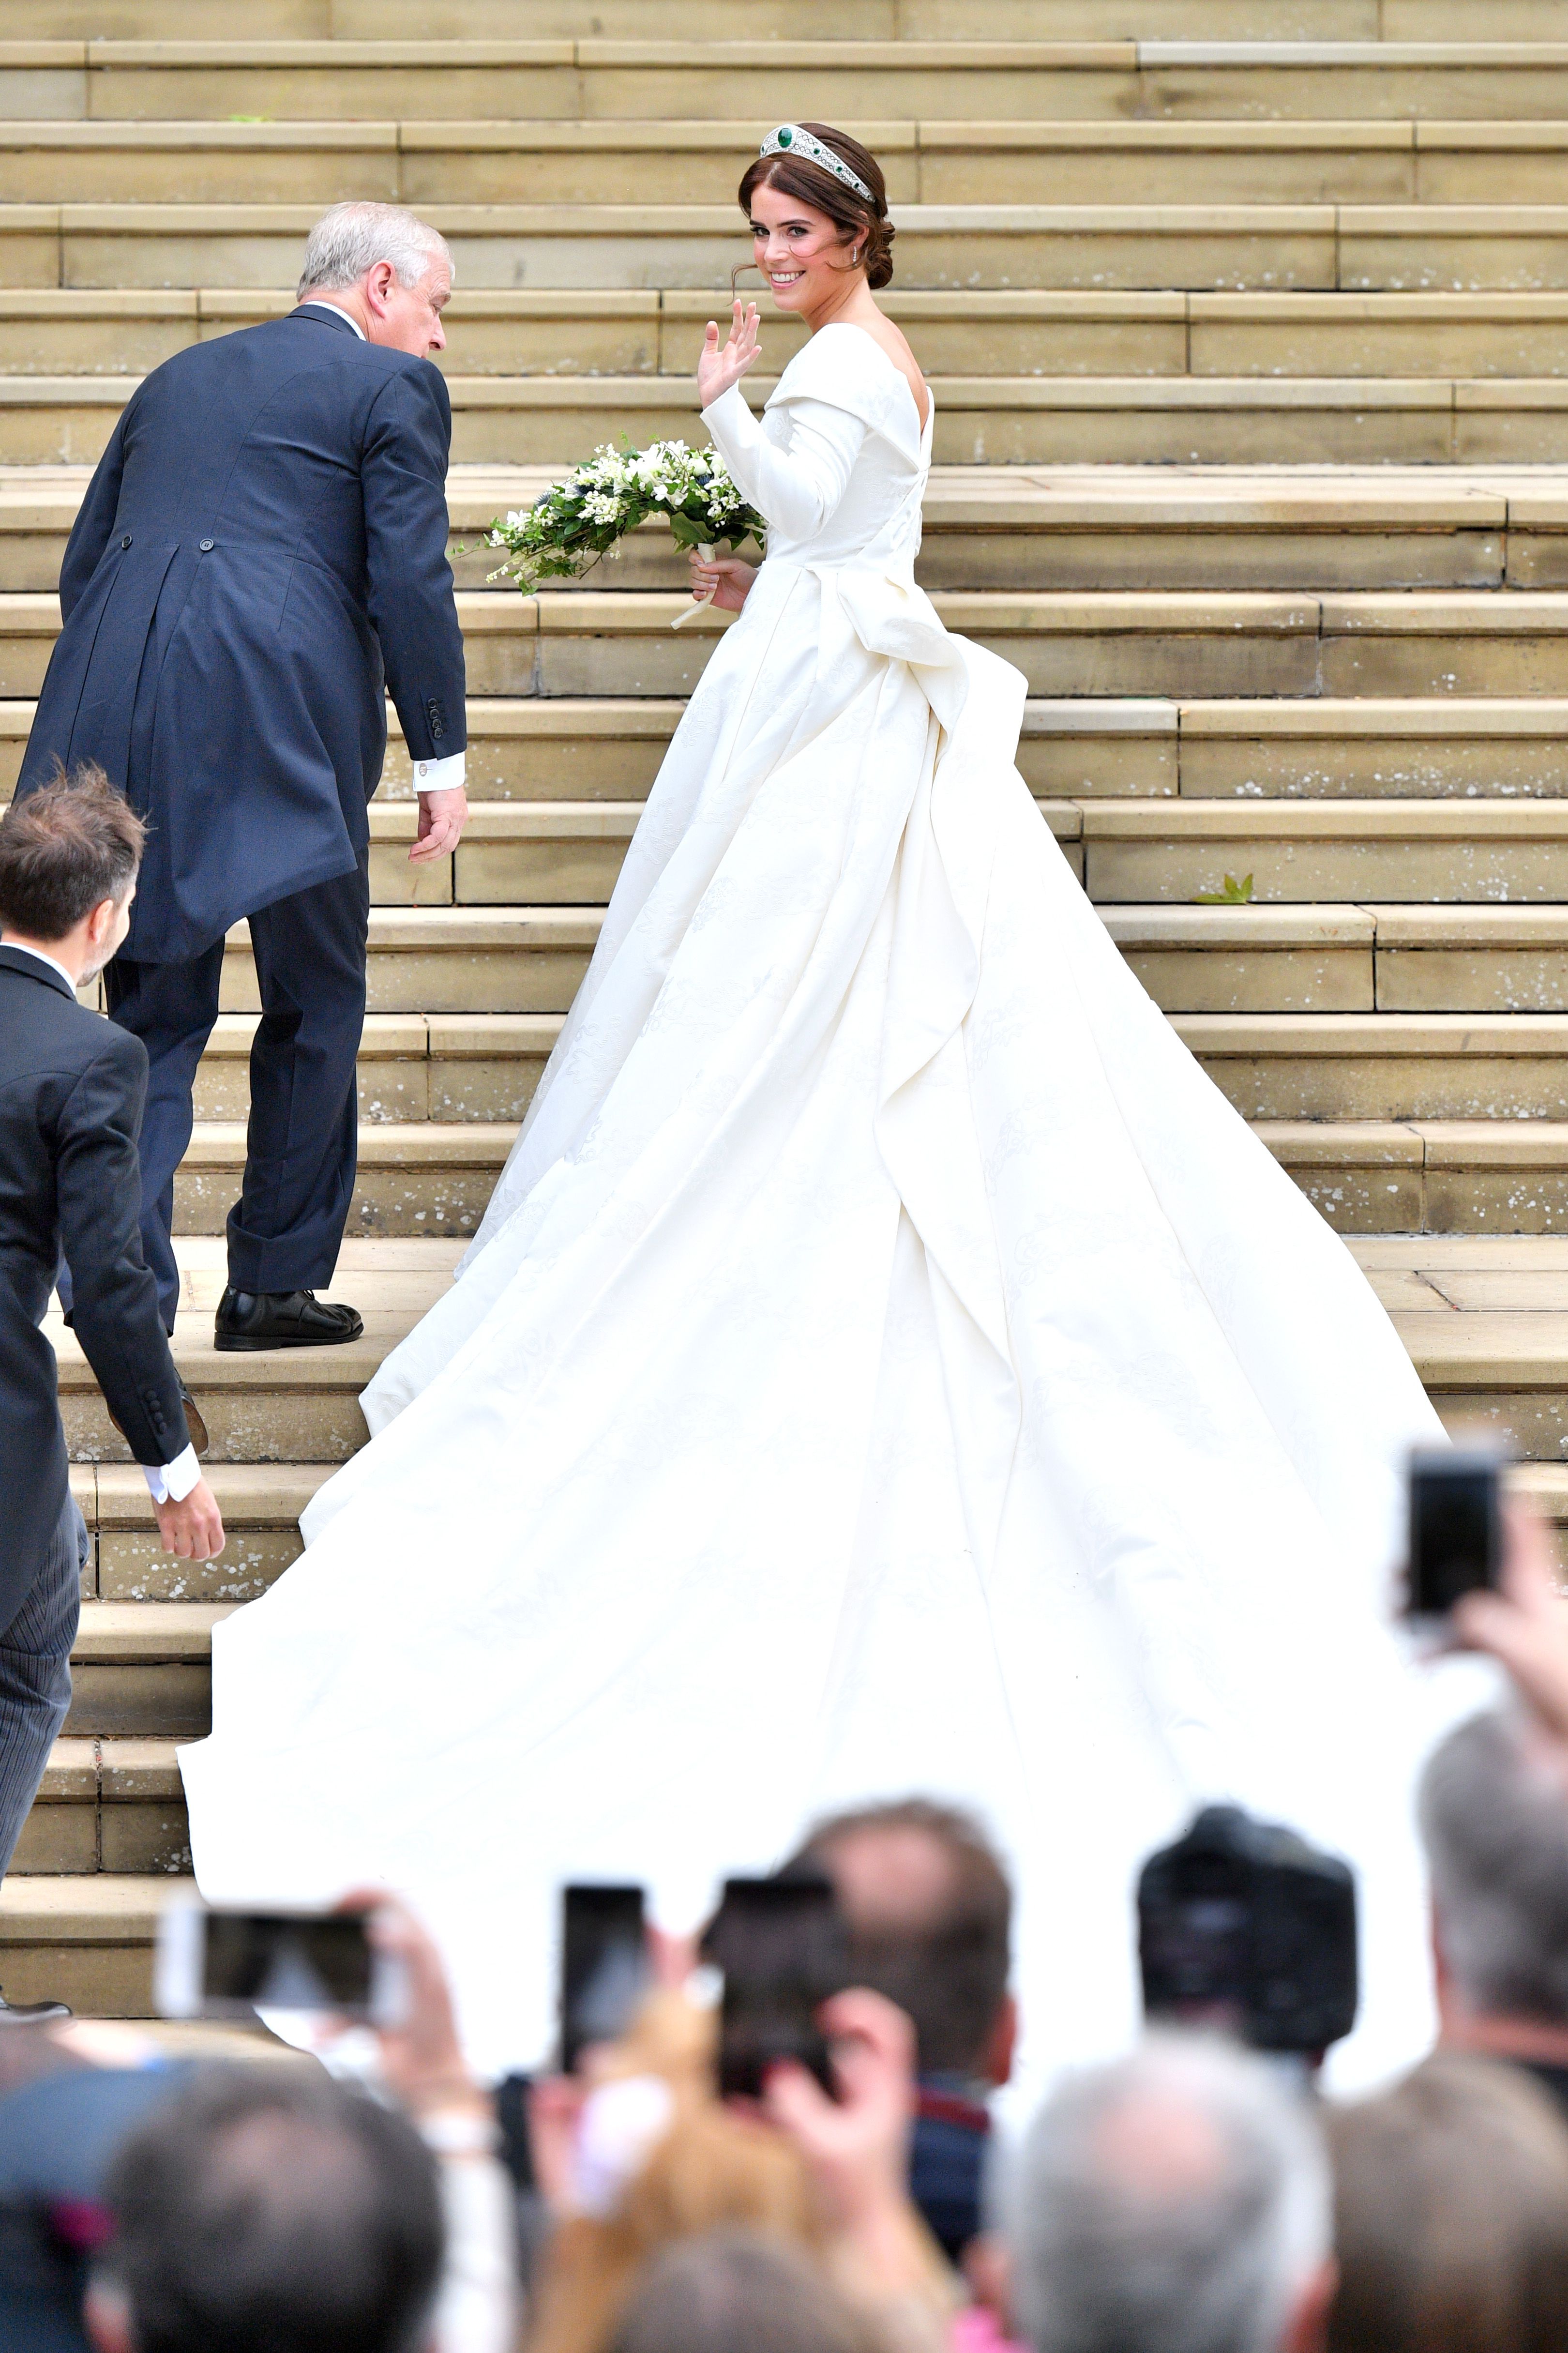 kate and meghan wedding dress